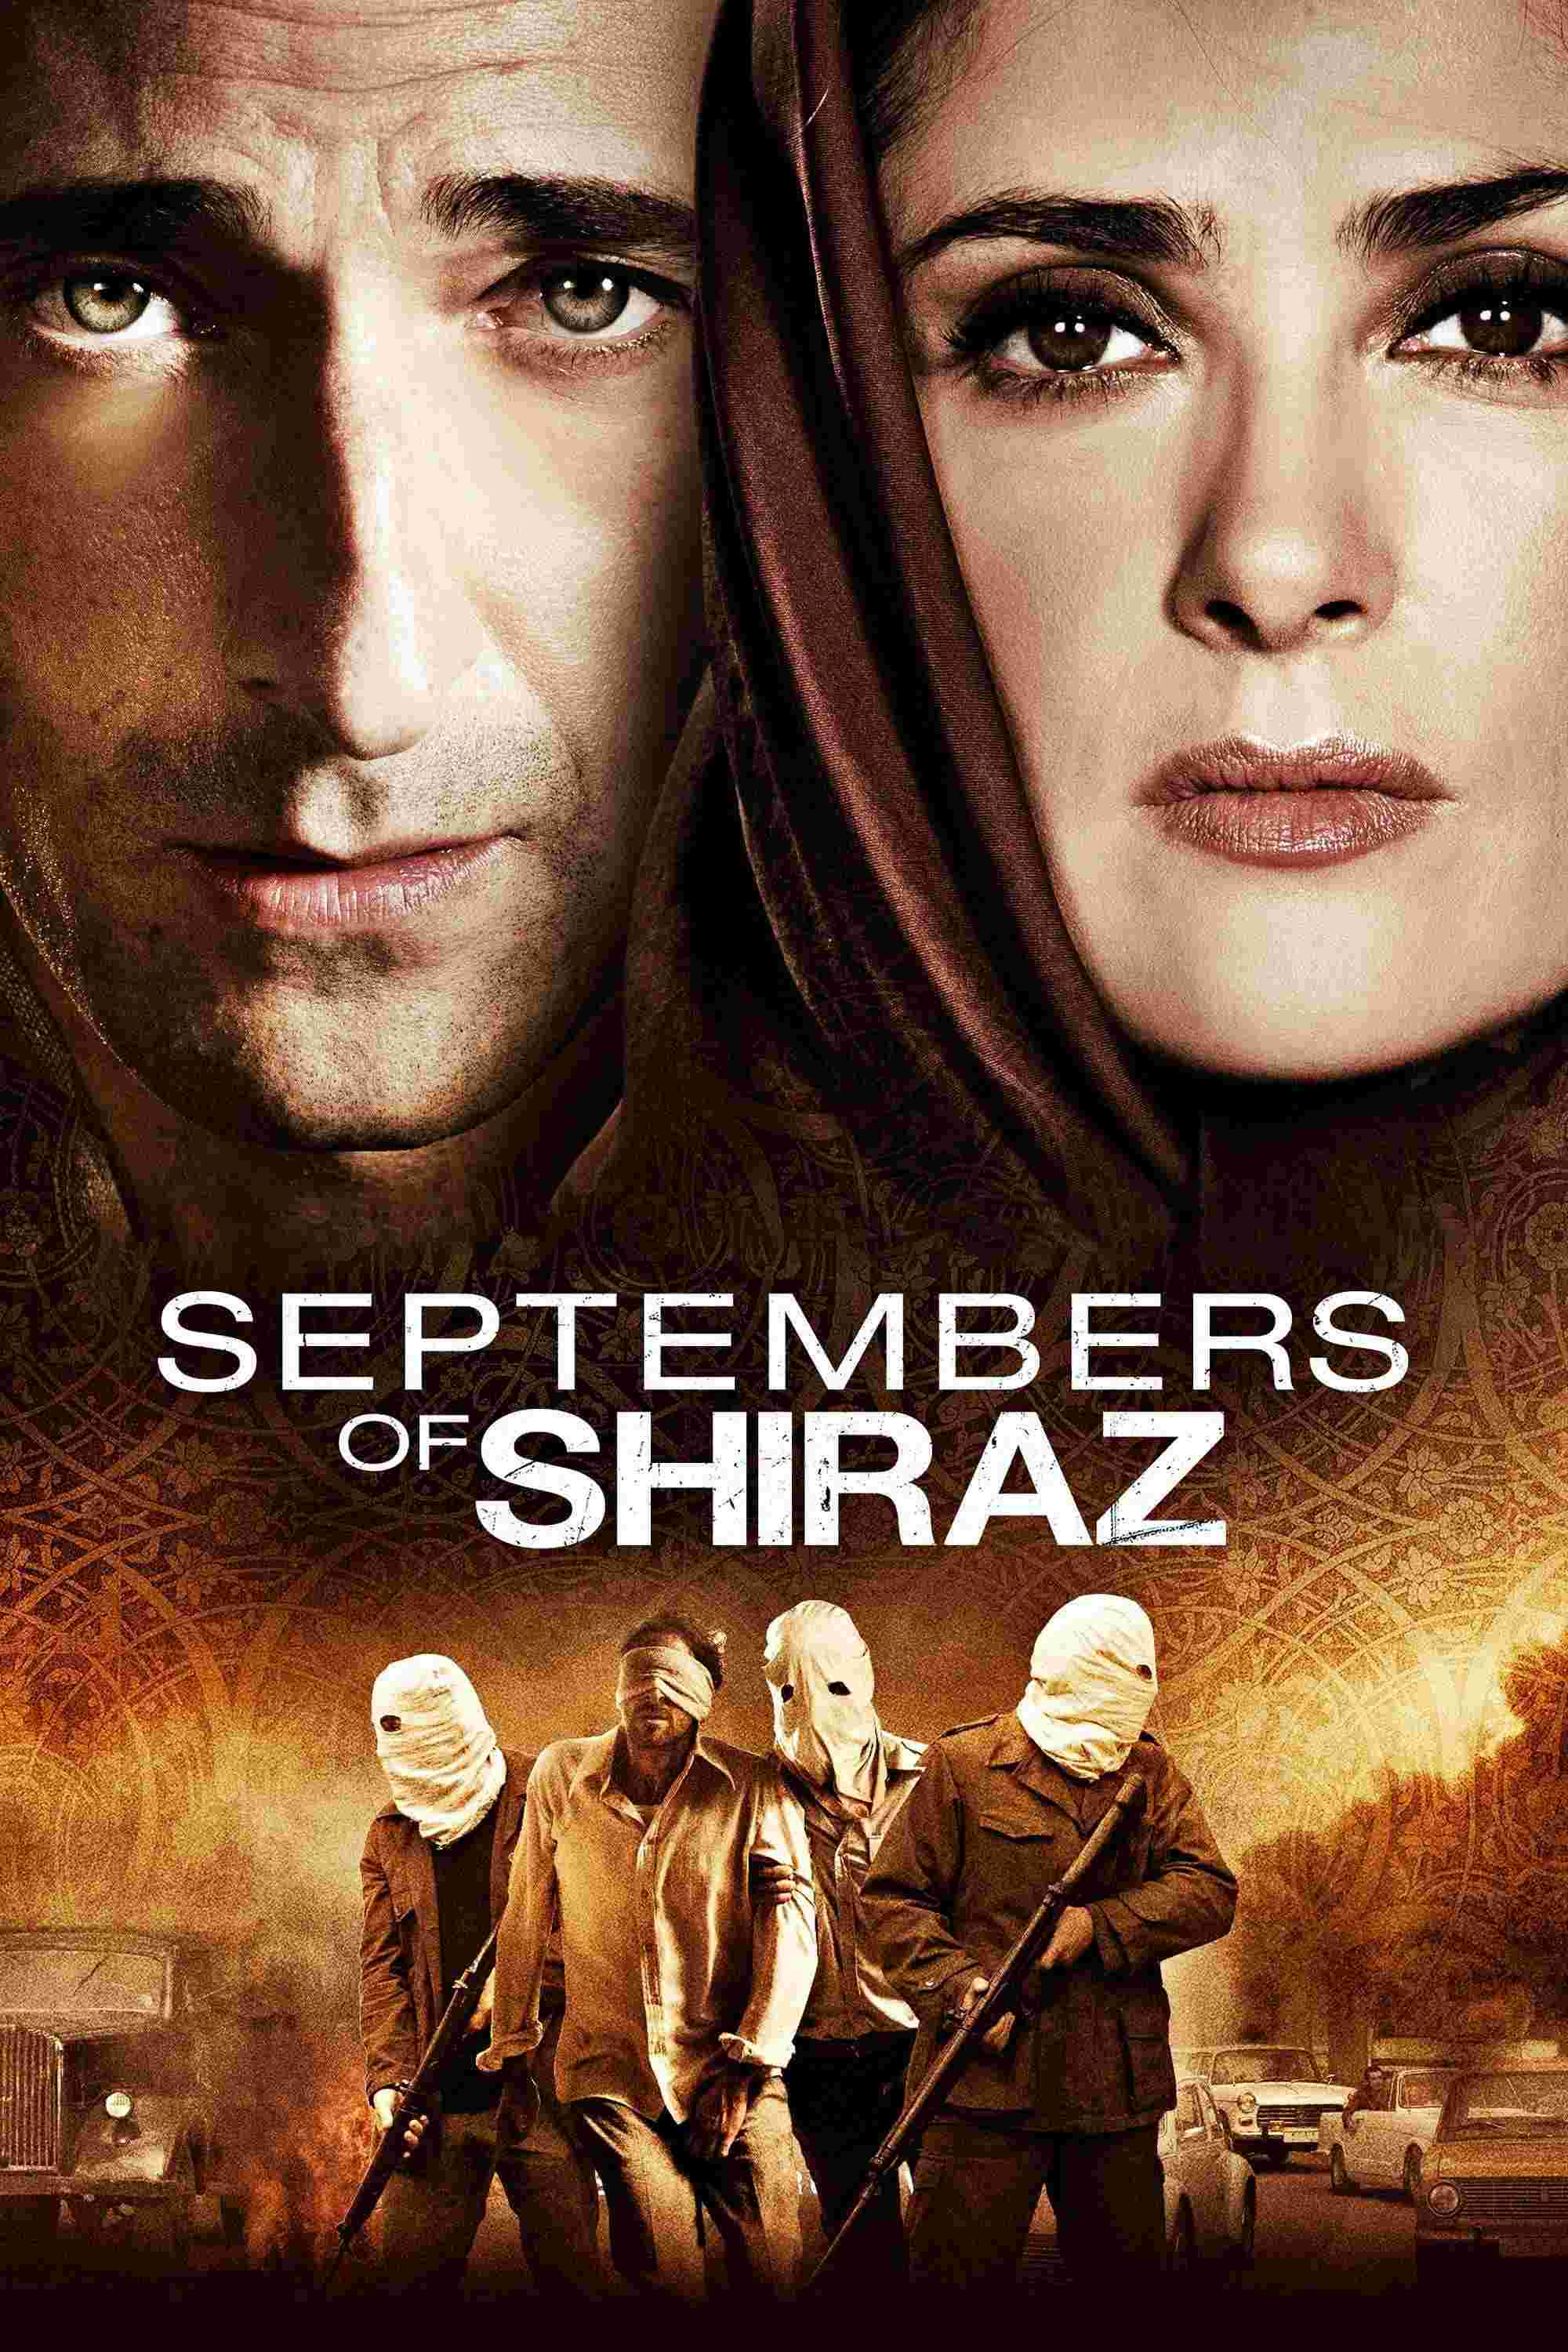 Septembers of Shiraz (2015) Shohreh Aghdashloo